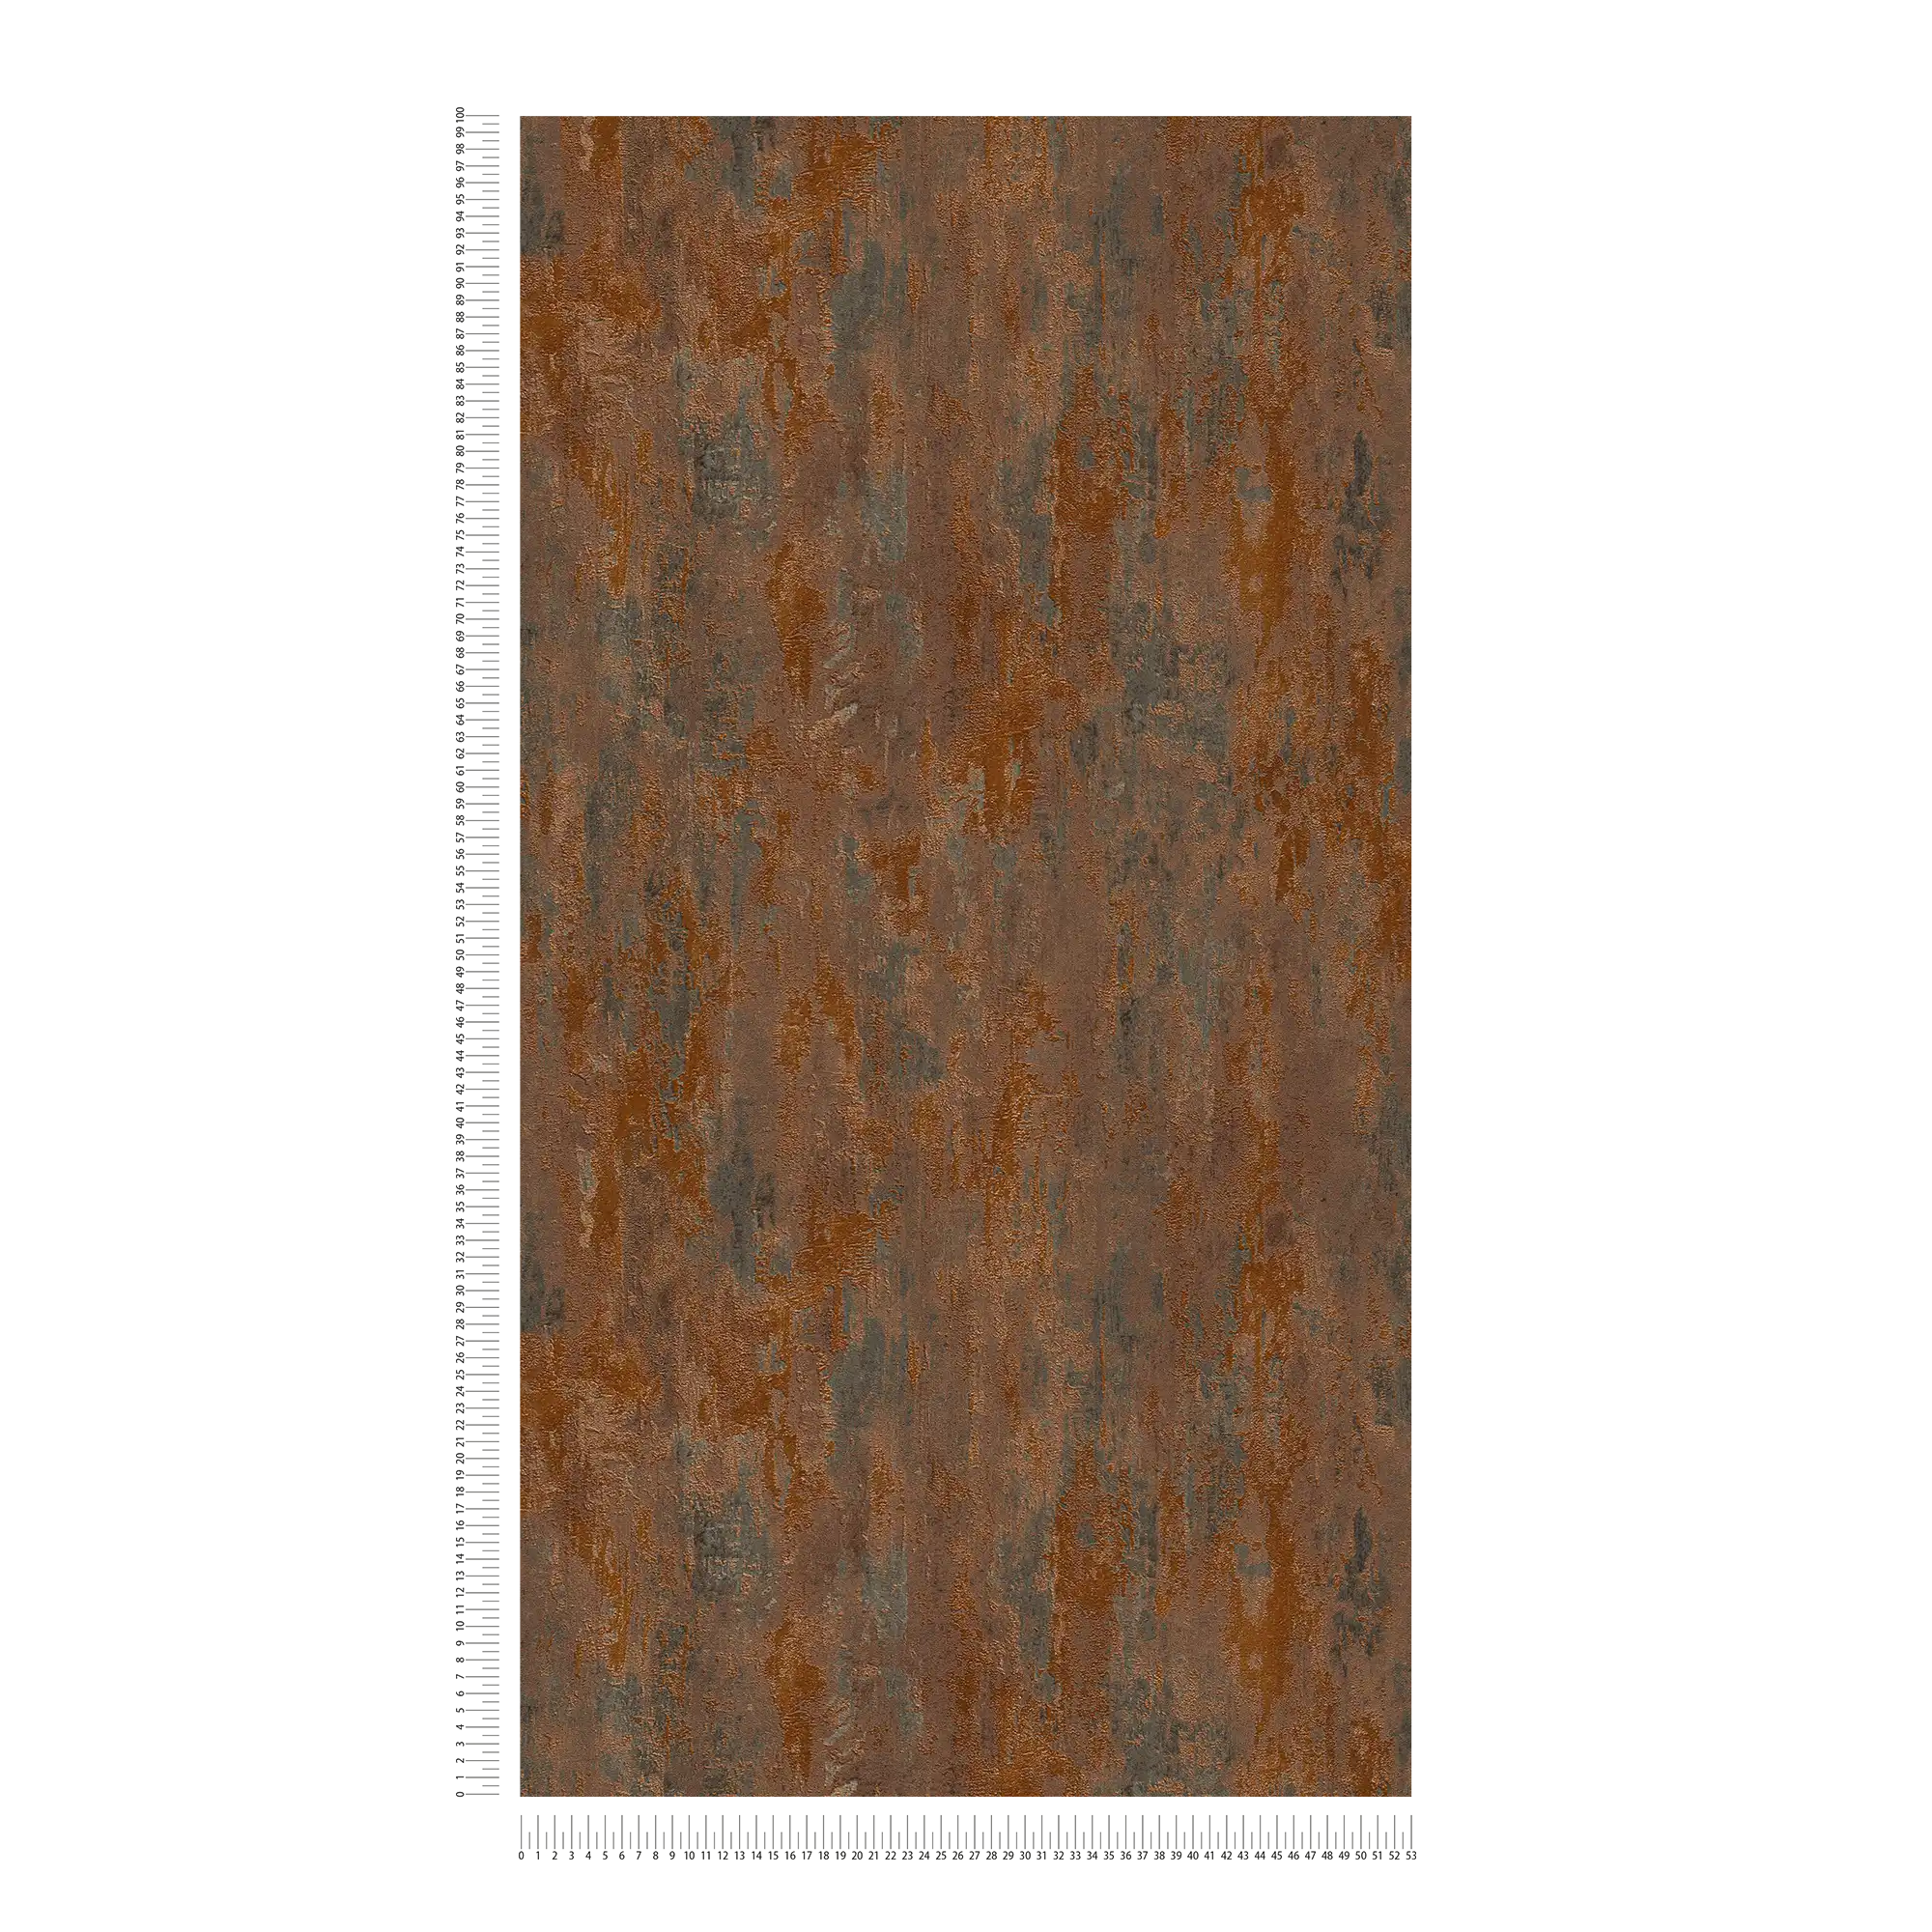             Wallpaper rust & metallic effect in industrial style - orange, copper, brown
        